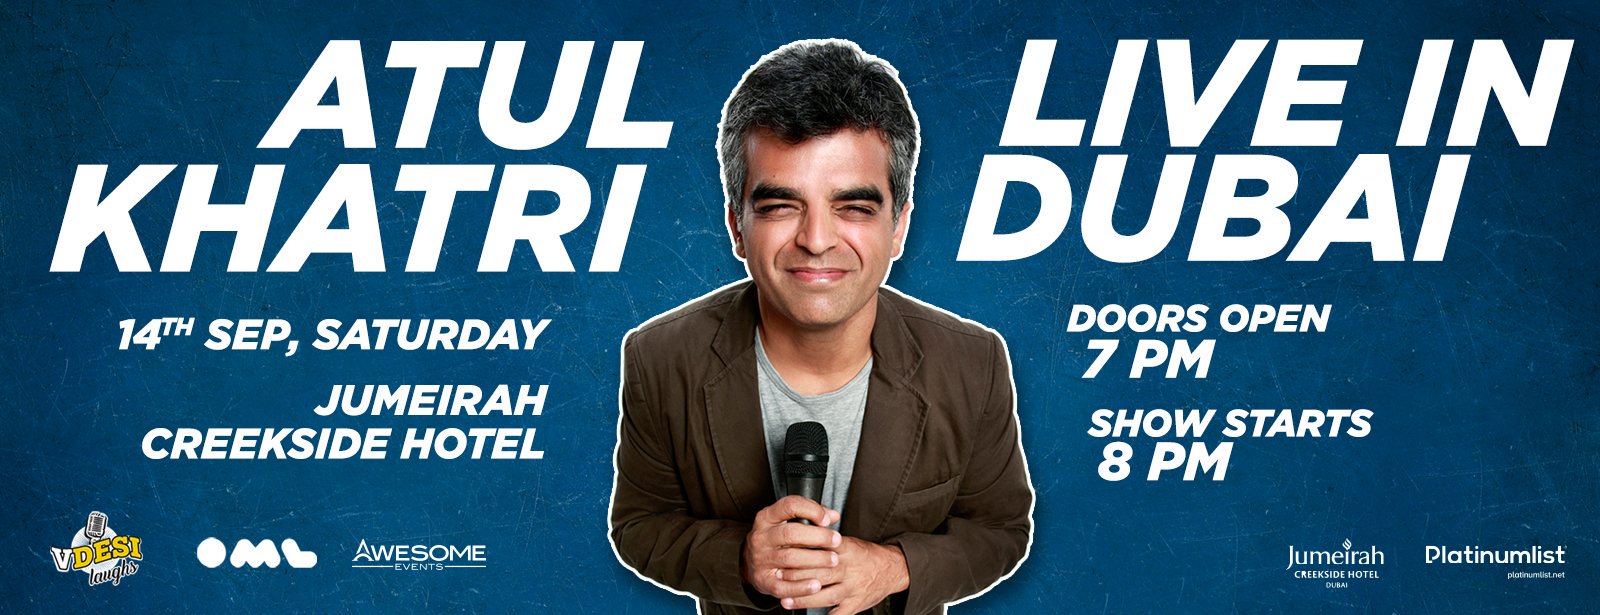 Atul Khatri Comedy Show - Coming Soon in UAE